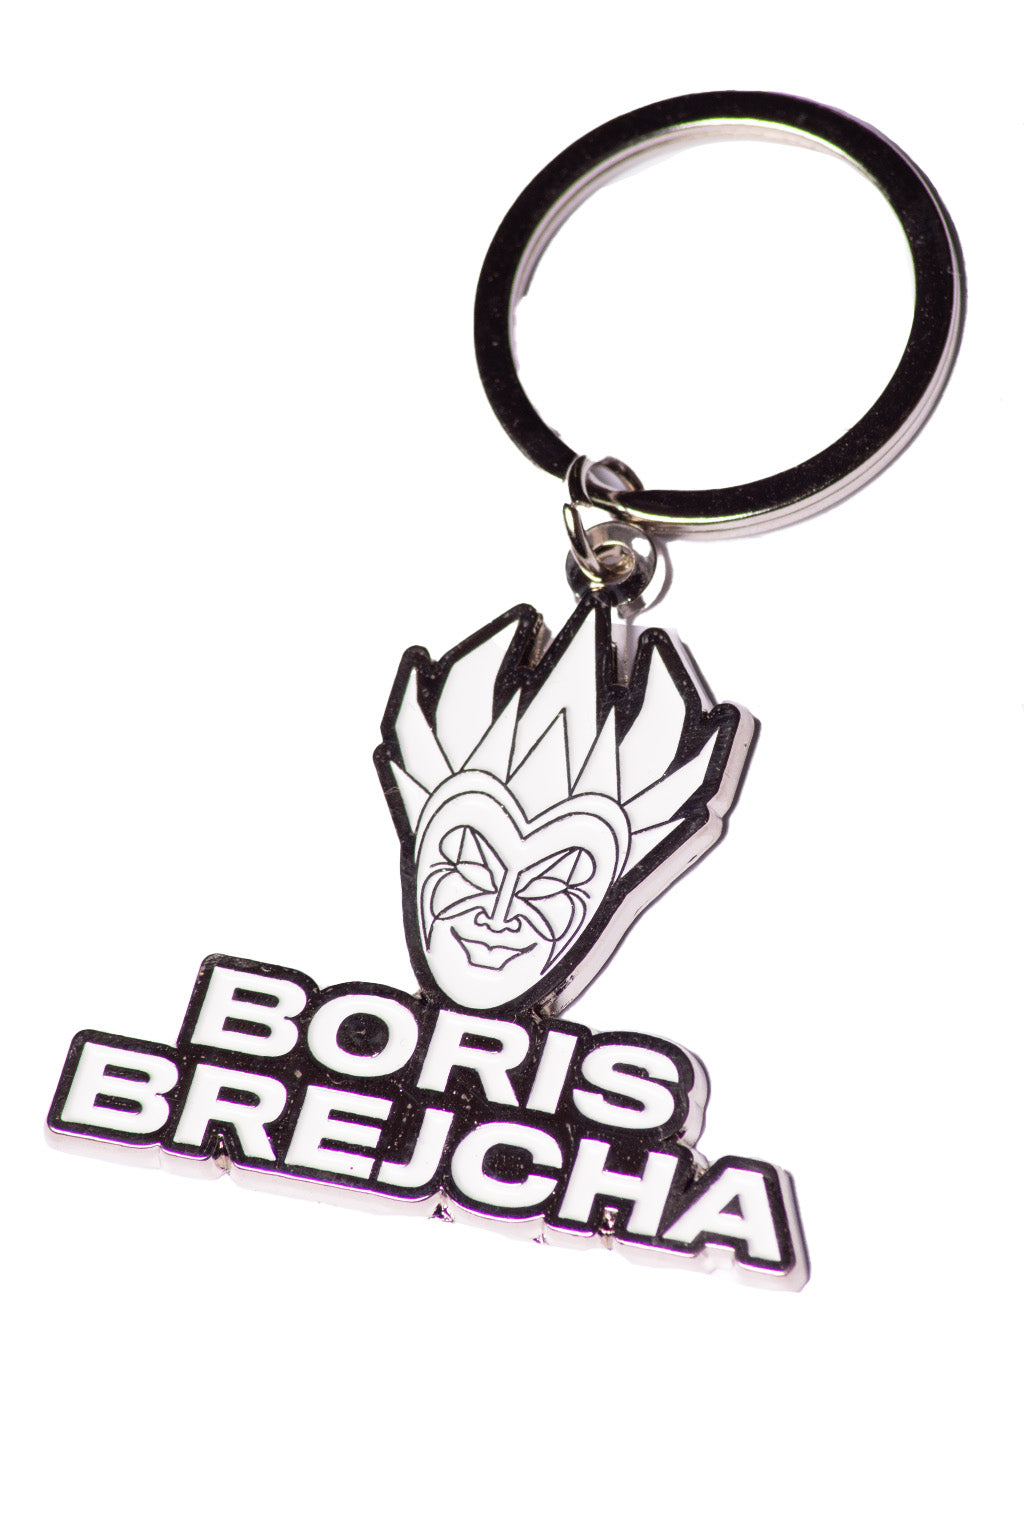 Boris Brejcha - Logo Keychain